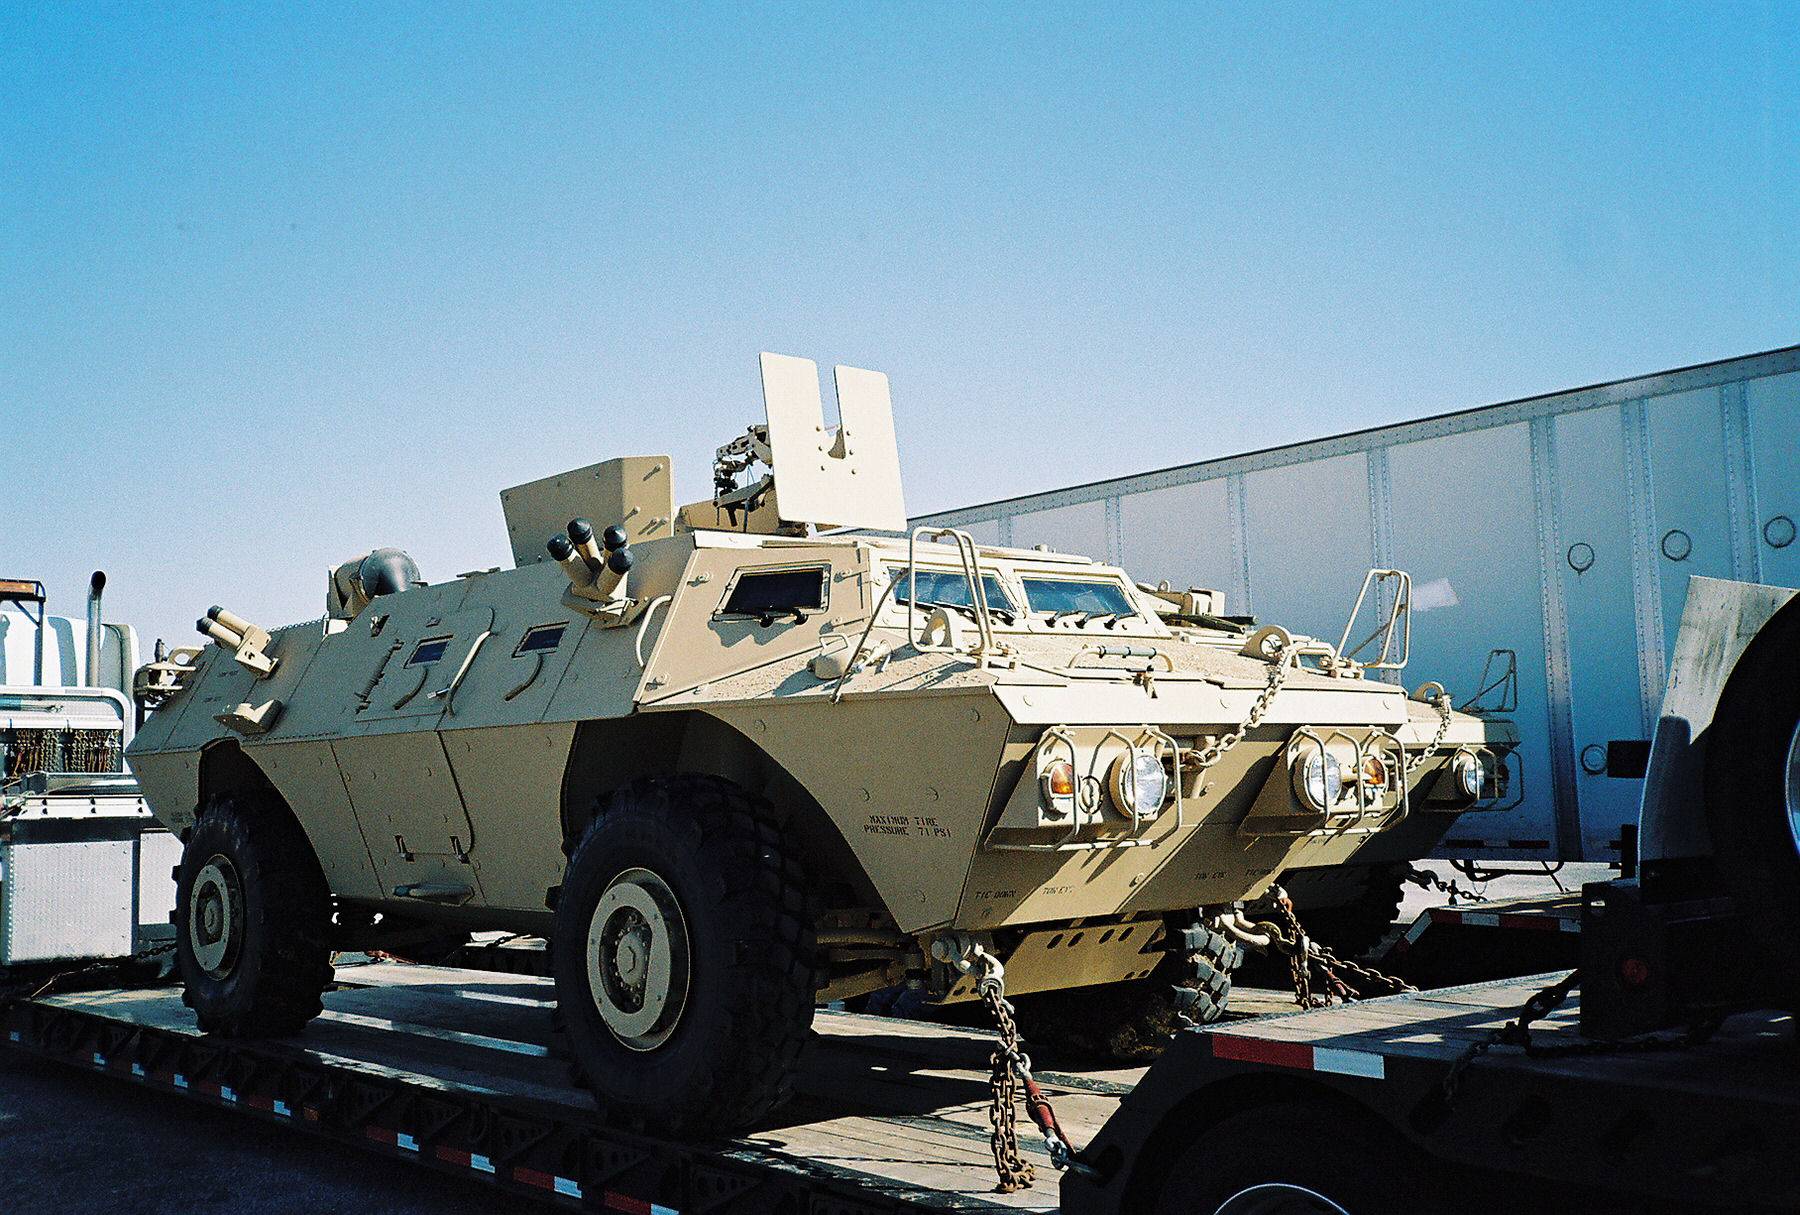 Бронированная машина безопасности m1117 - m1117 armored security vehicle